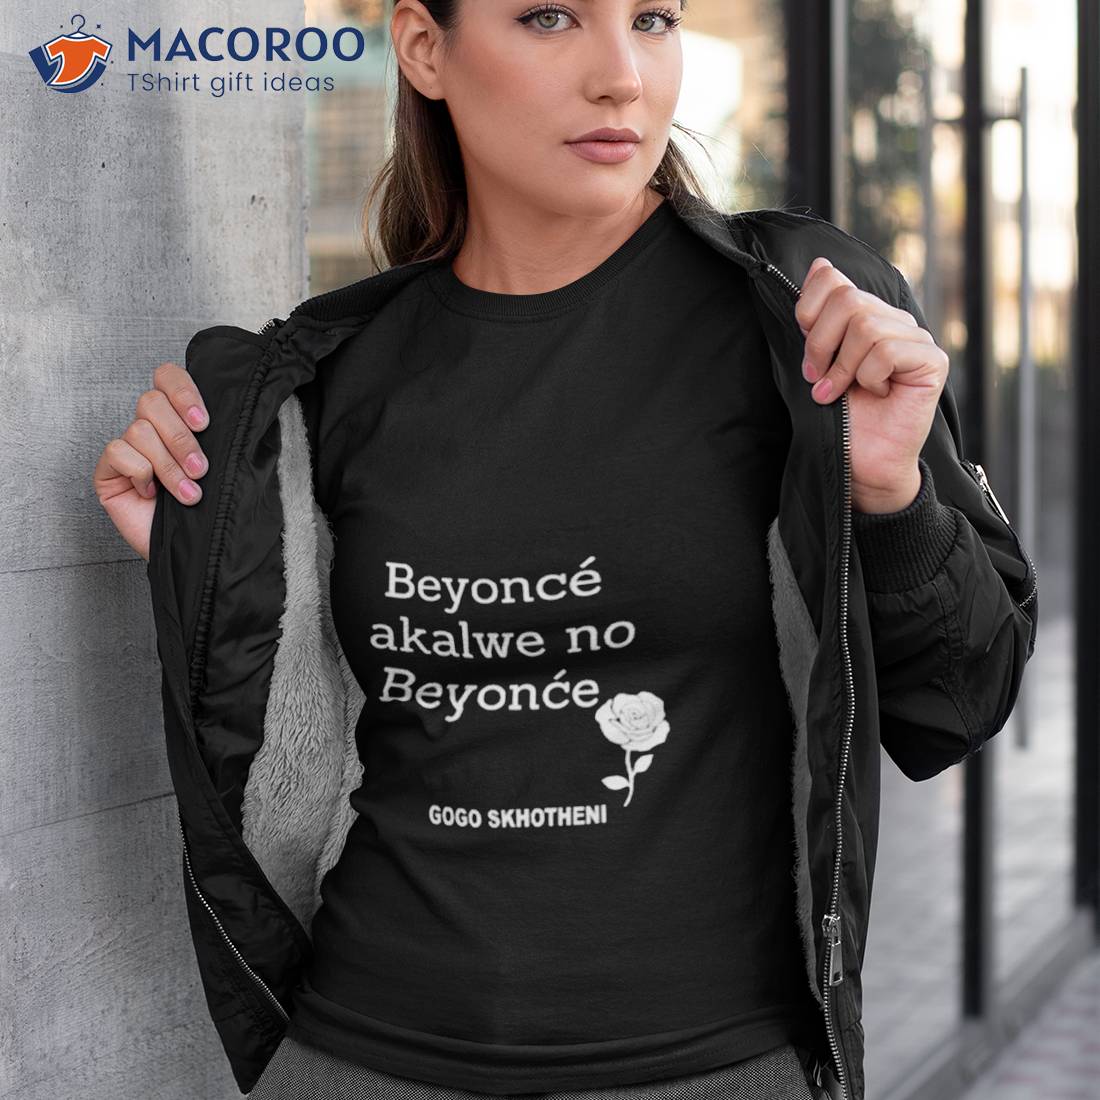 Beyonce t shirt